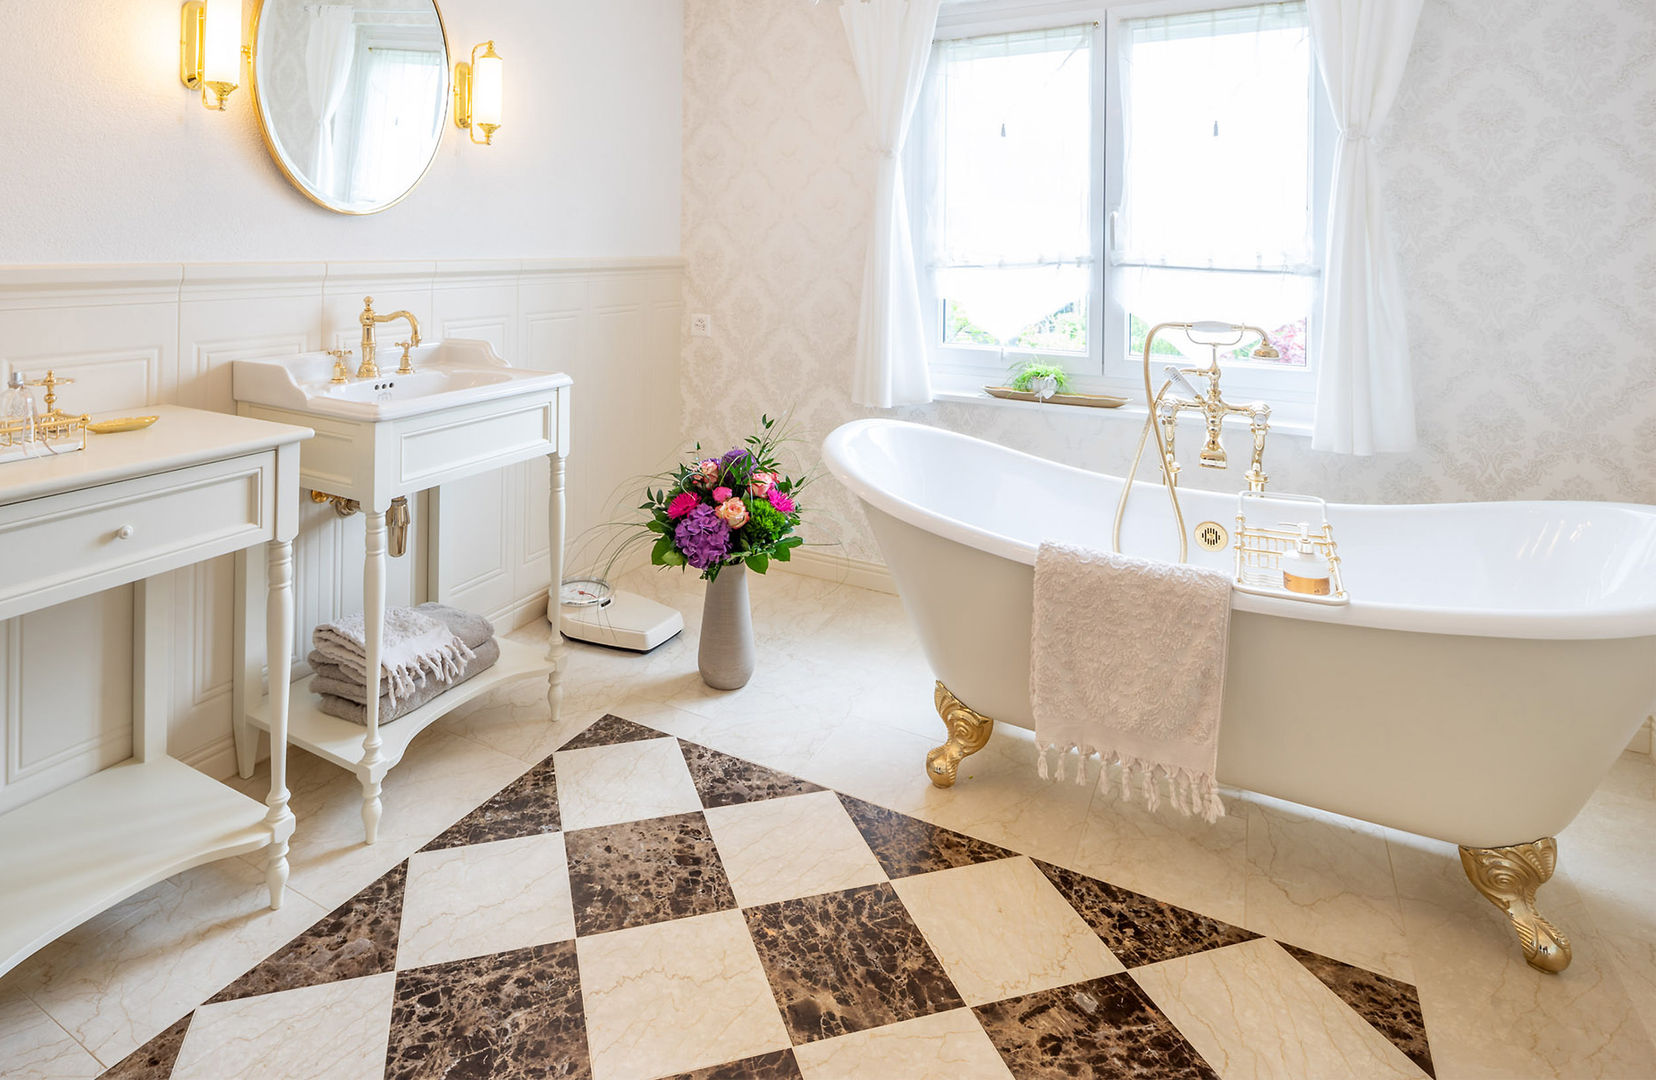 Exklusives Vintage Bad, Traditional Bathrooms GmbH Traditional Bathrooms GmbH Salle de bain classique